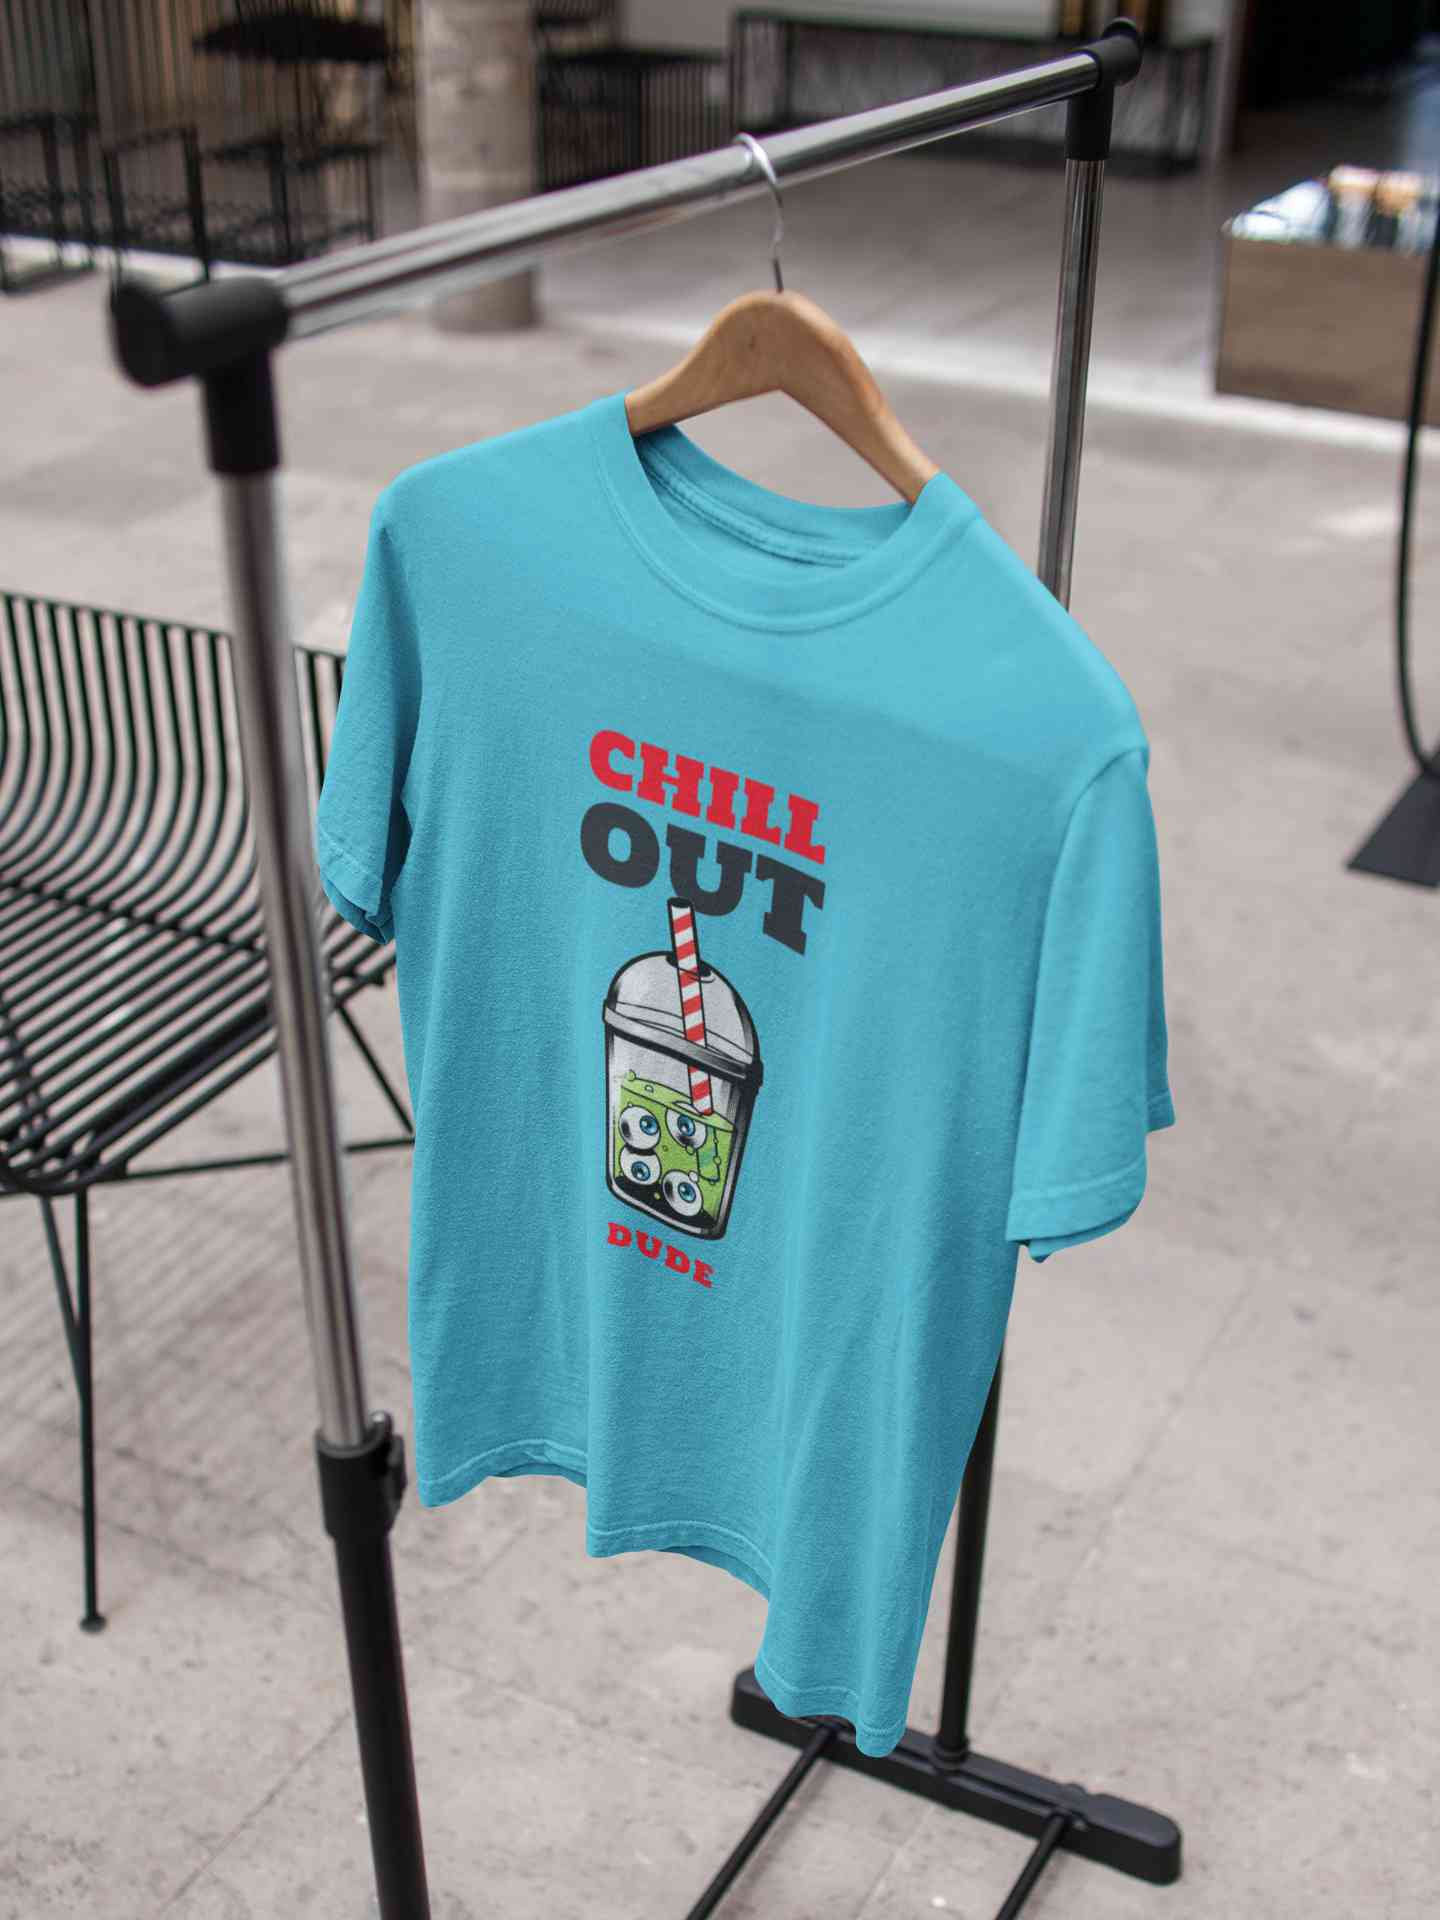 Chill Out Dude Women Half Sleeves T-shirt- FunkyTeesClub